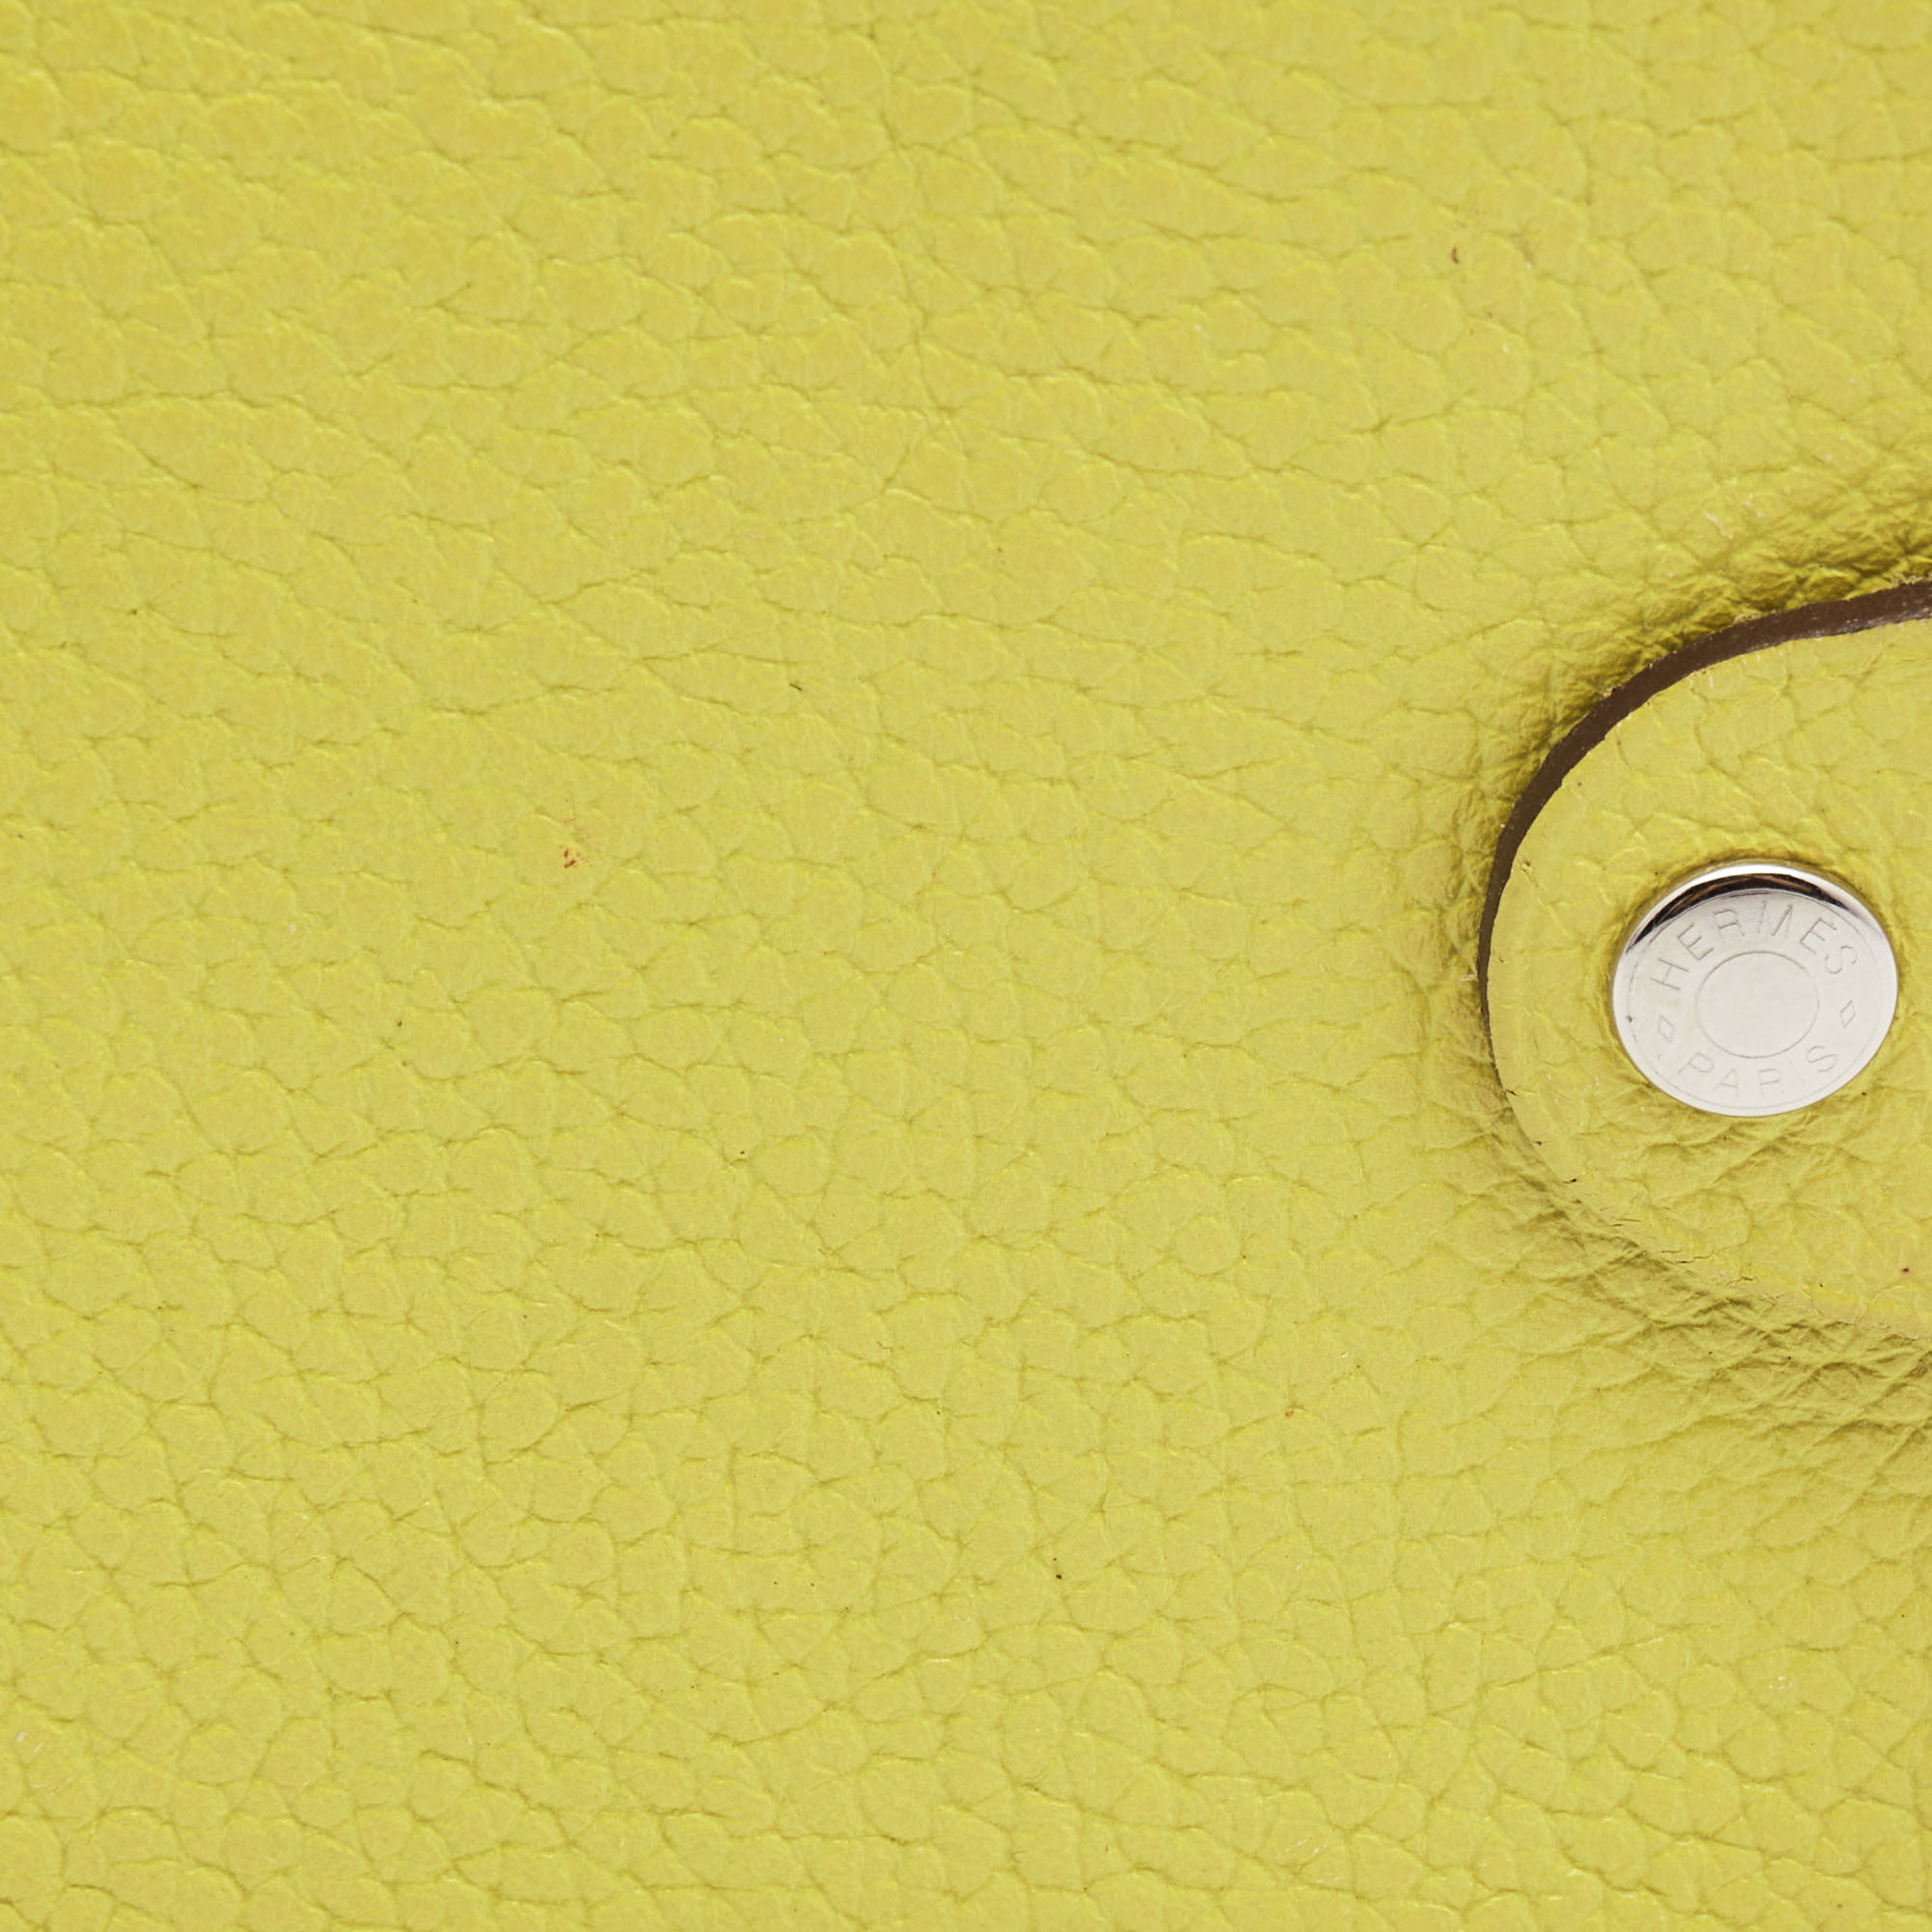 Hermes Kiwi Togo Leather Ulysse Mini Notebook